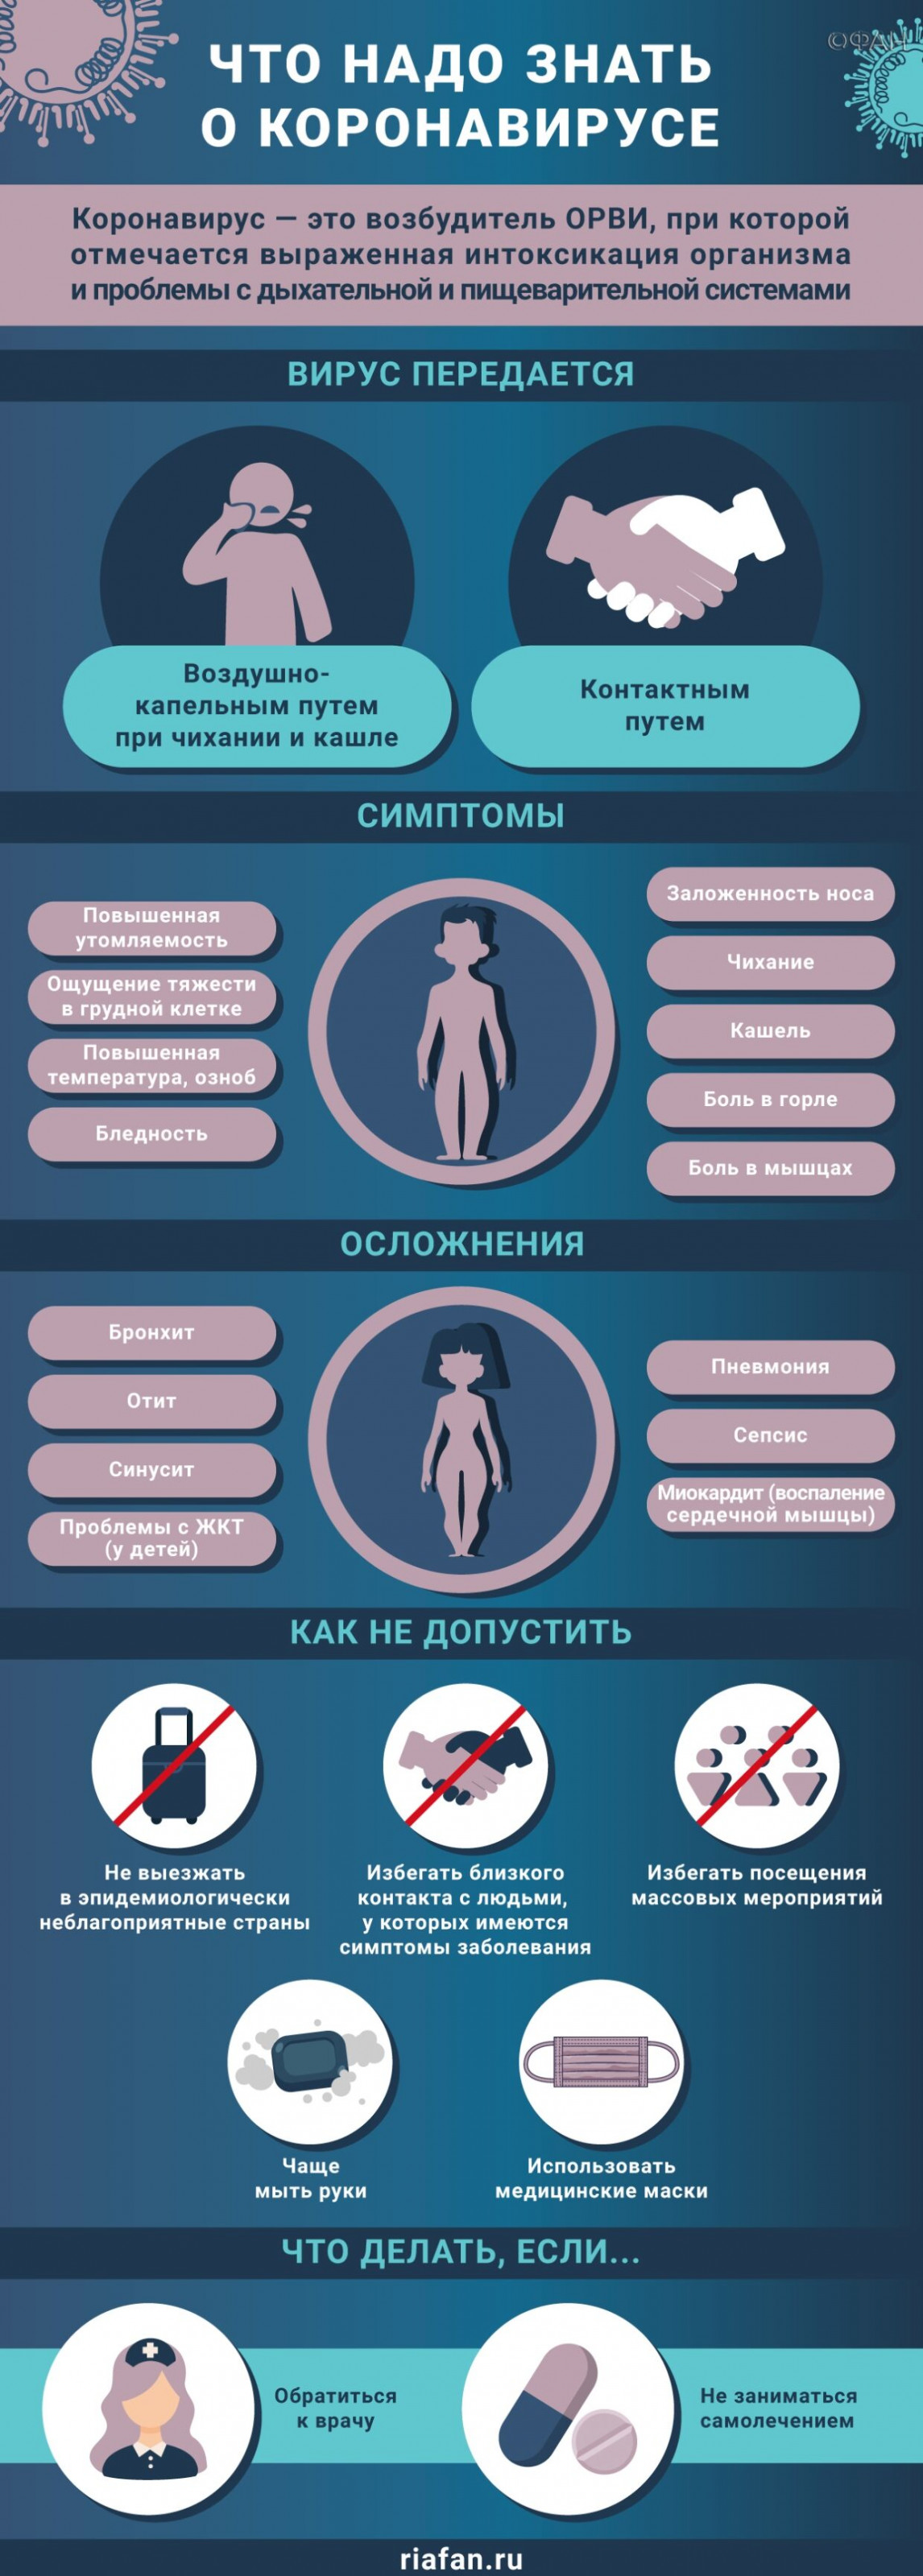 В Петербурге тест на коронавирус за сутки сдали почти 11 тысяч человек